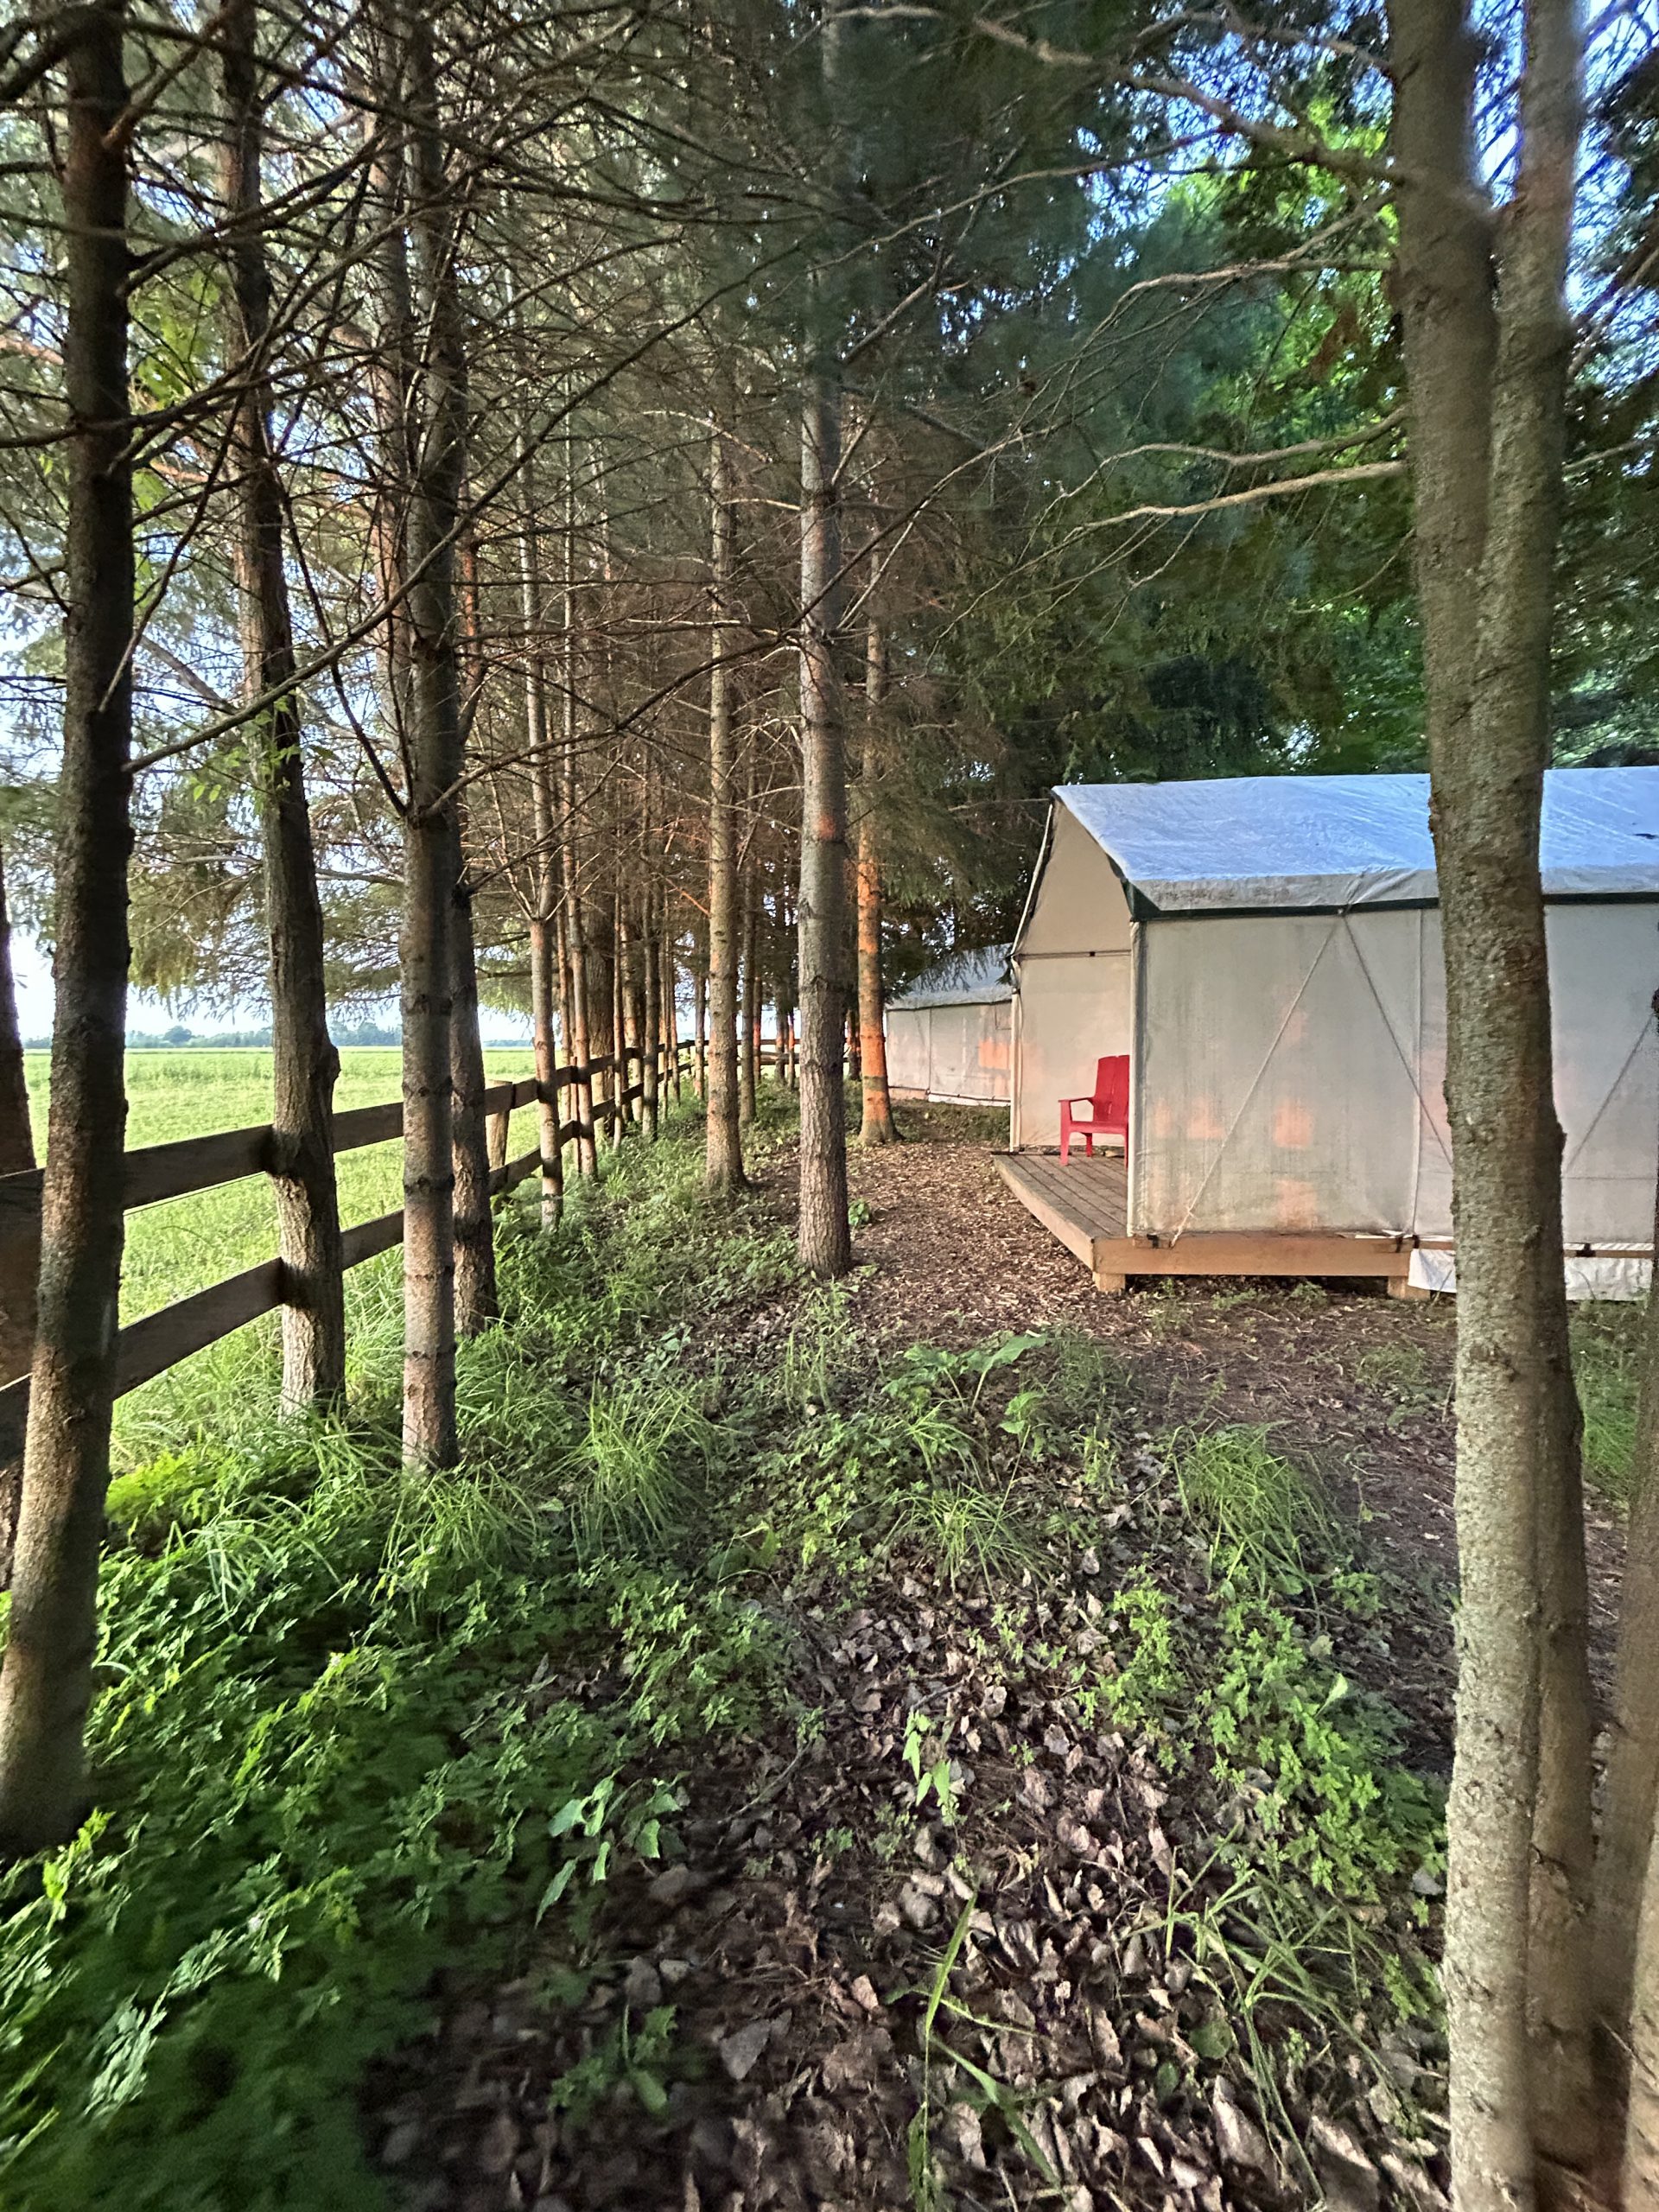 The Wellington tent at Irvineside Farm